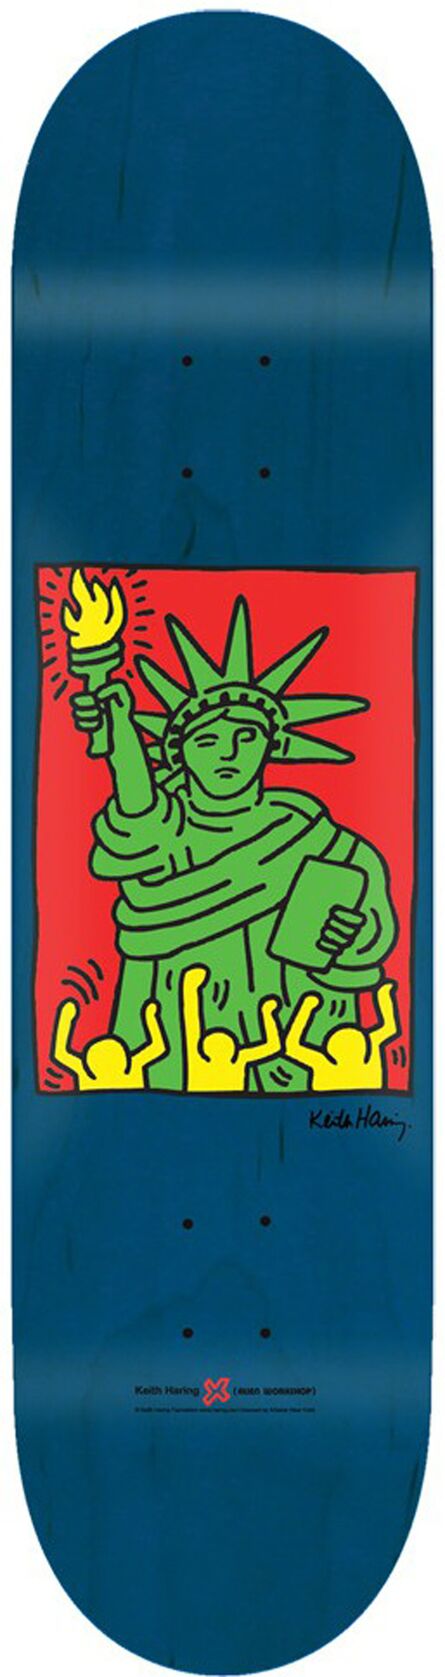 Keith Haring, ‘Liberty Skateboard Deck’, 2013